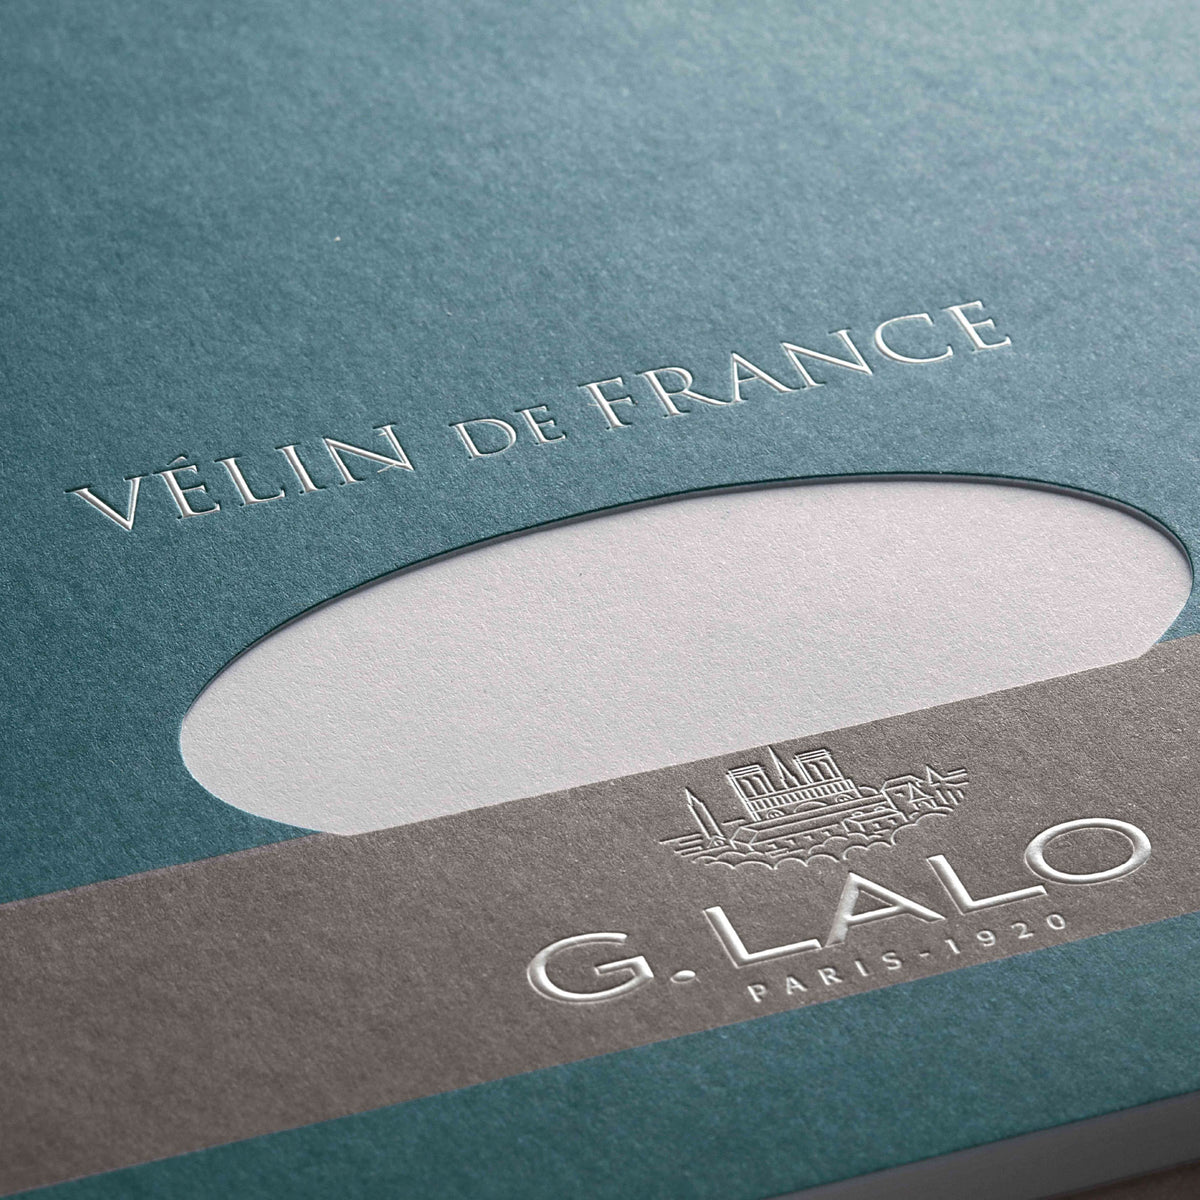 G. Lalo - Writing Pad - A4 - Smooth White (Vélin de France)